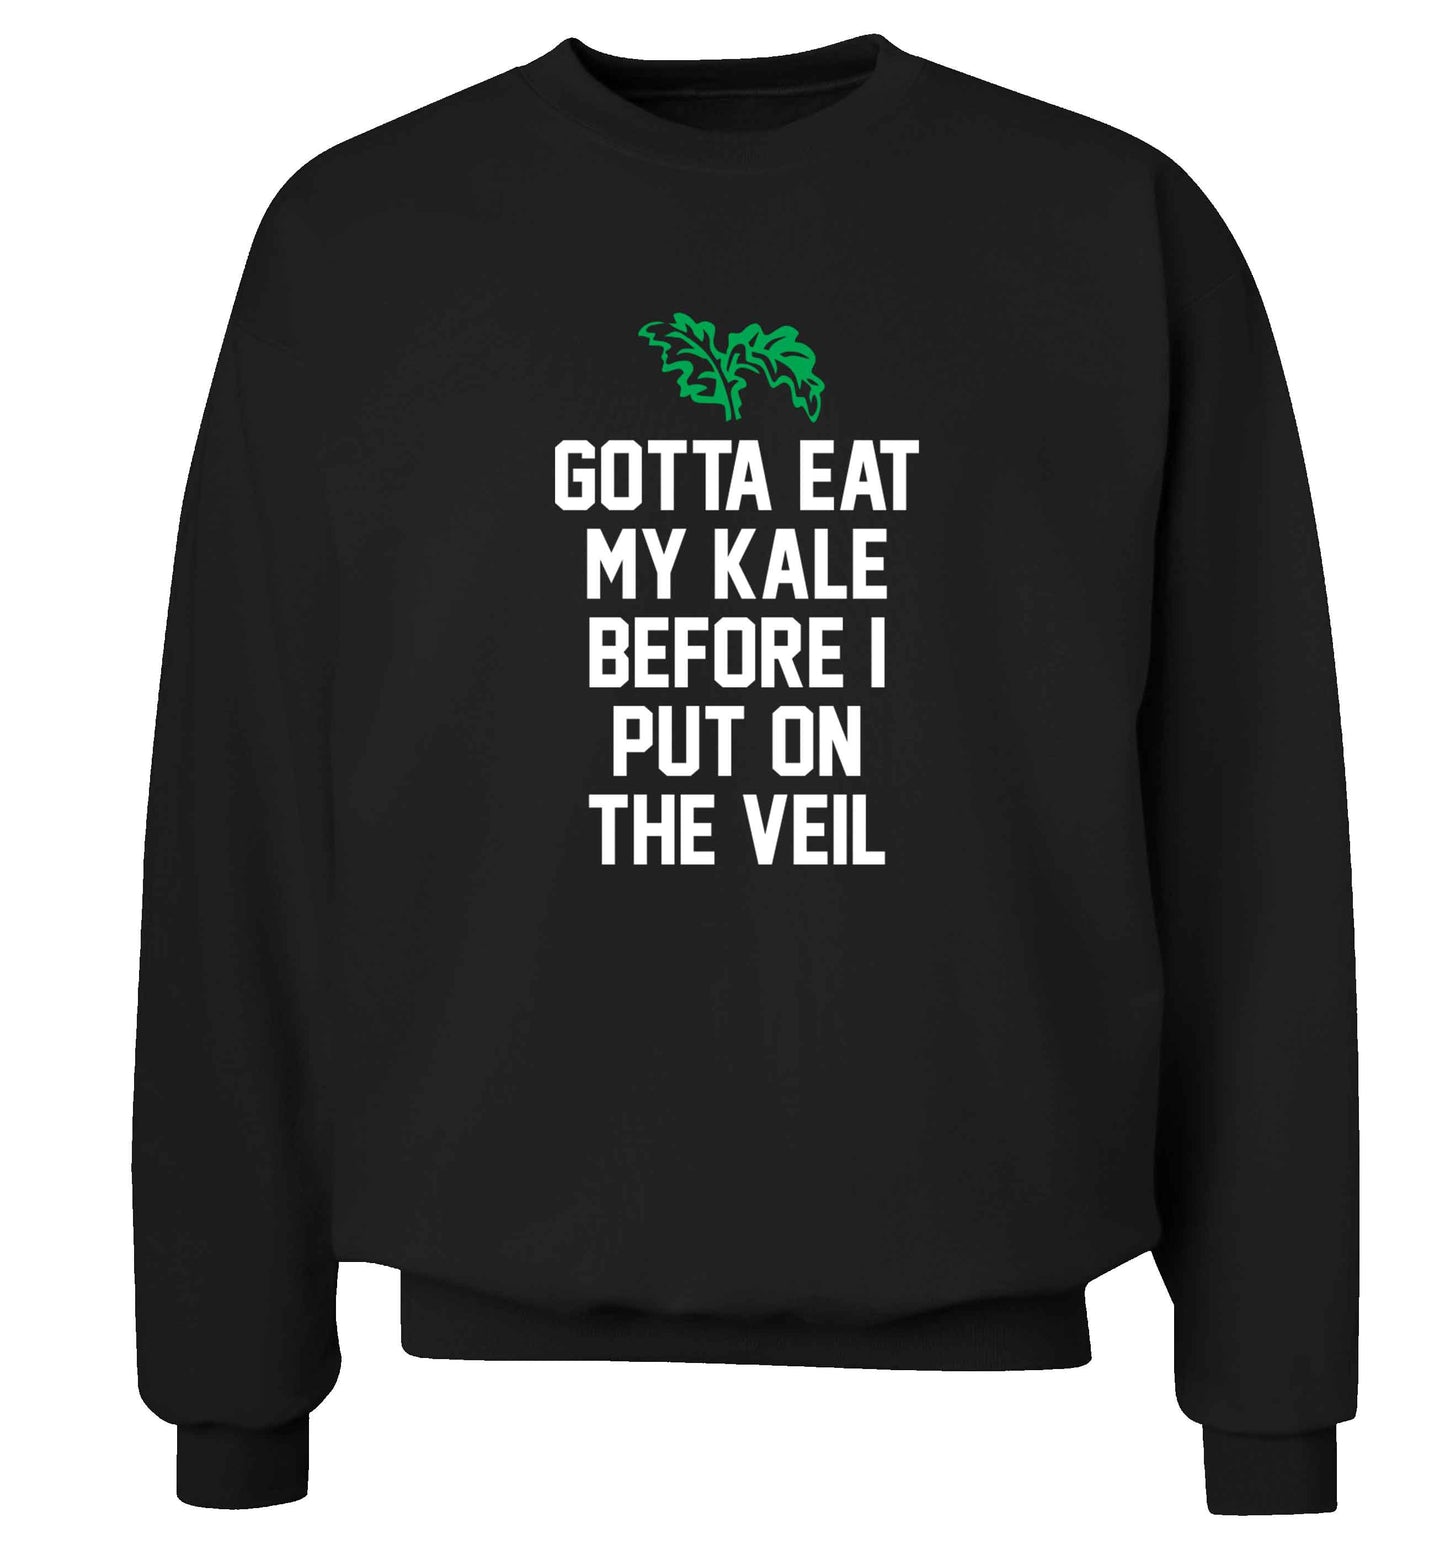 Gotta eat my kale before I put on the veil Adult's unisex black Sweater 2XL